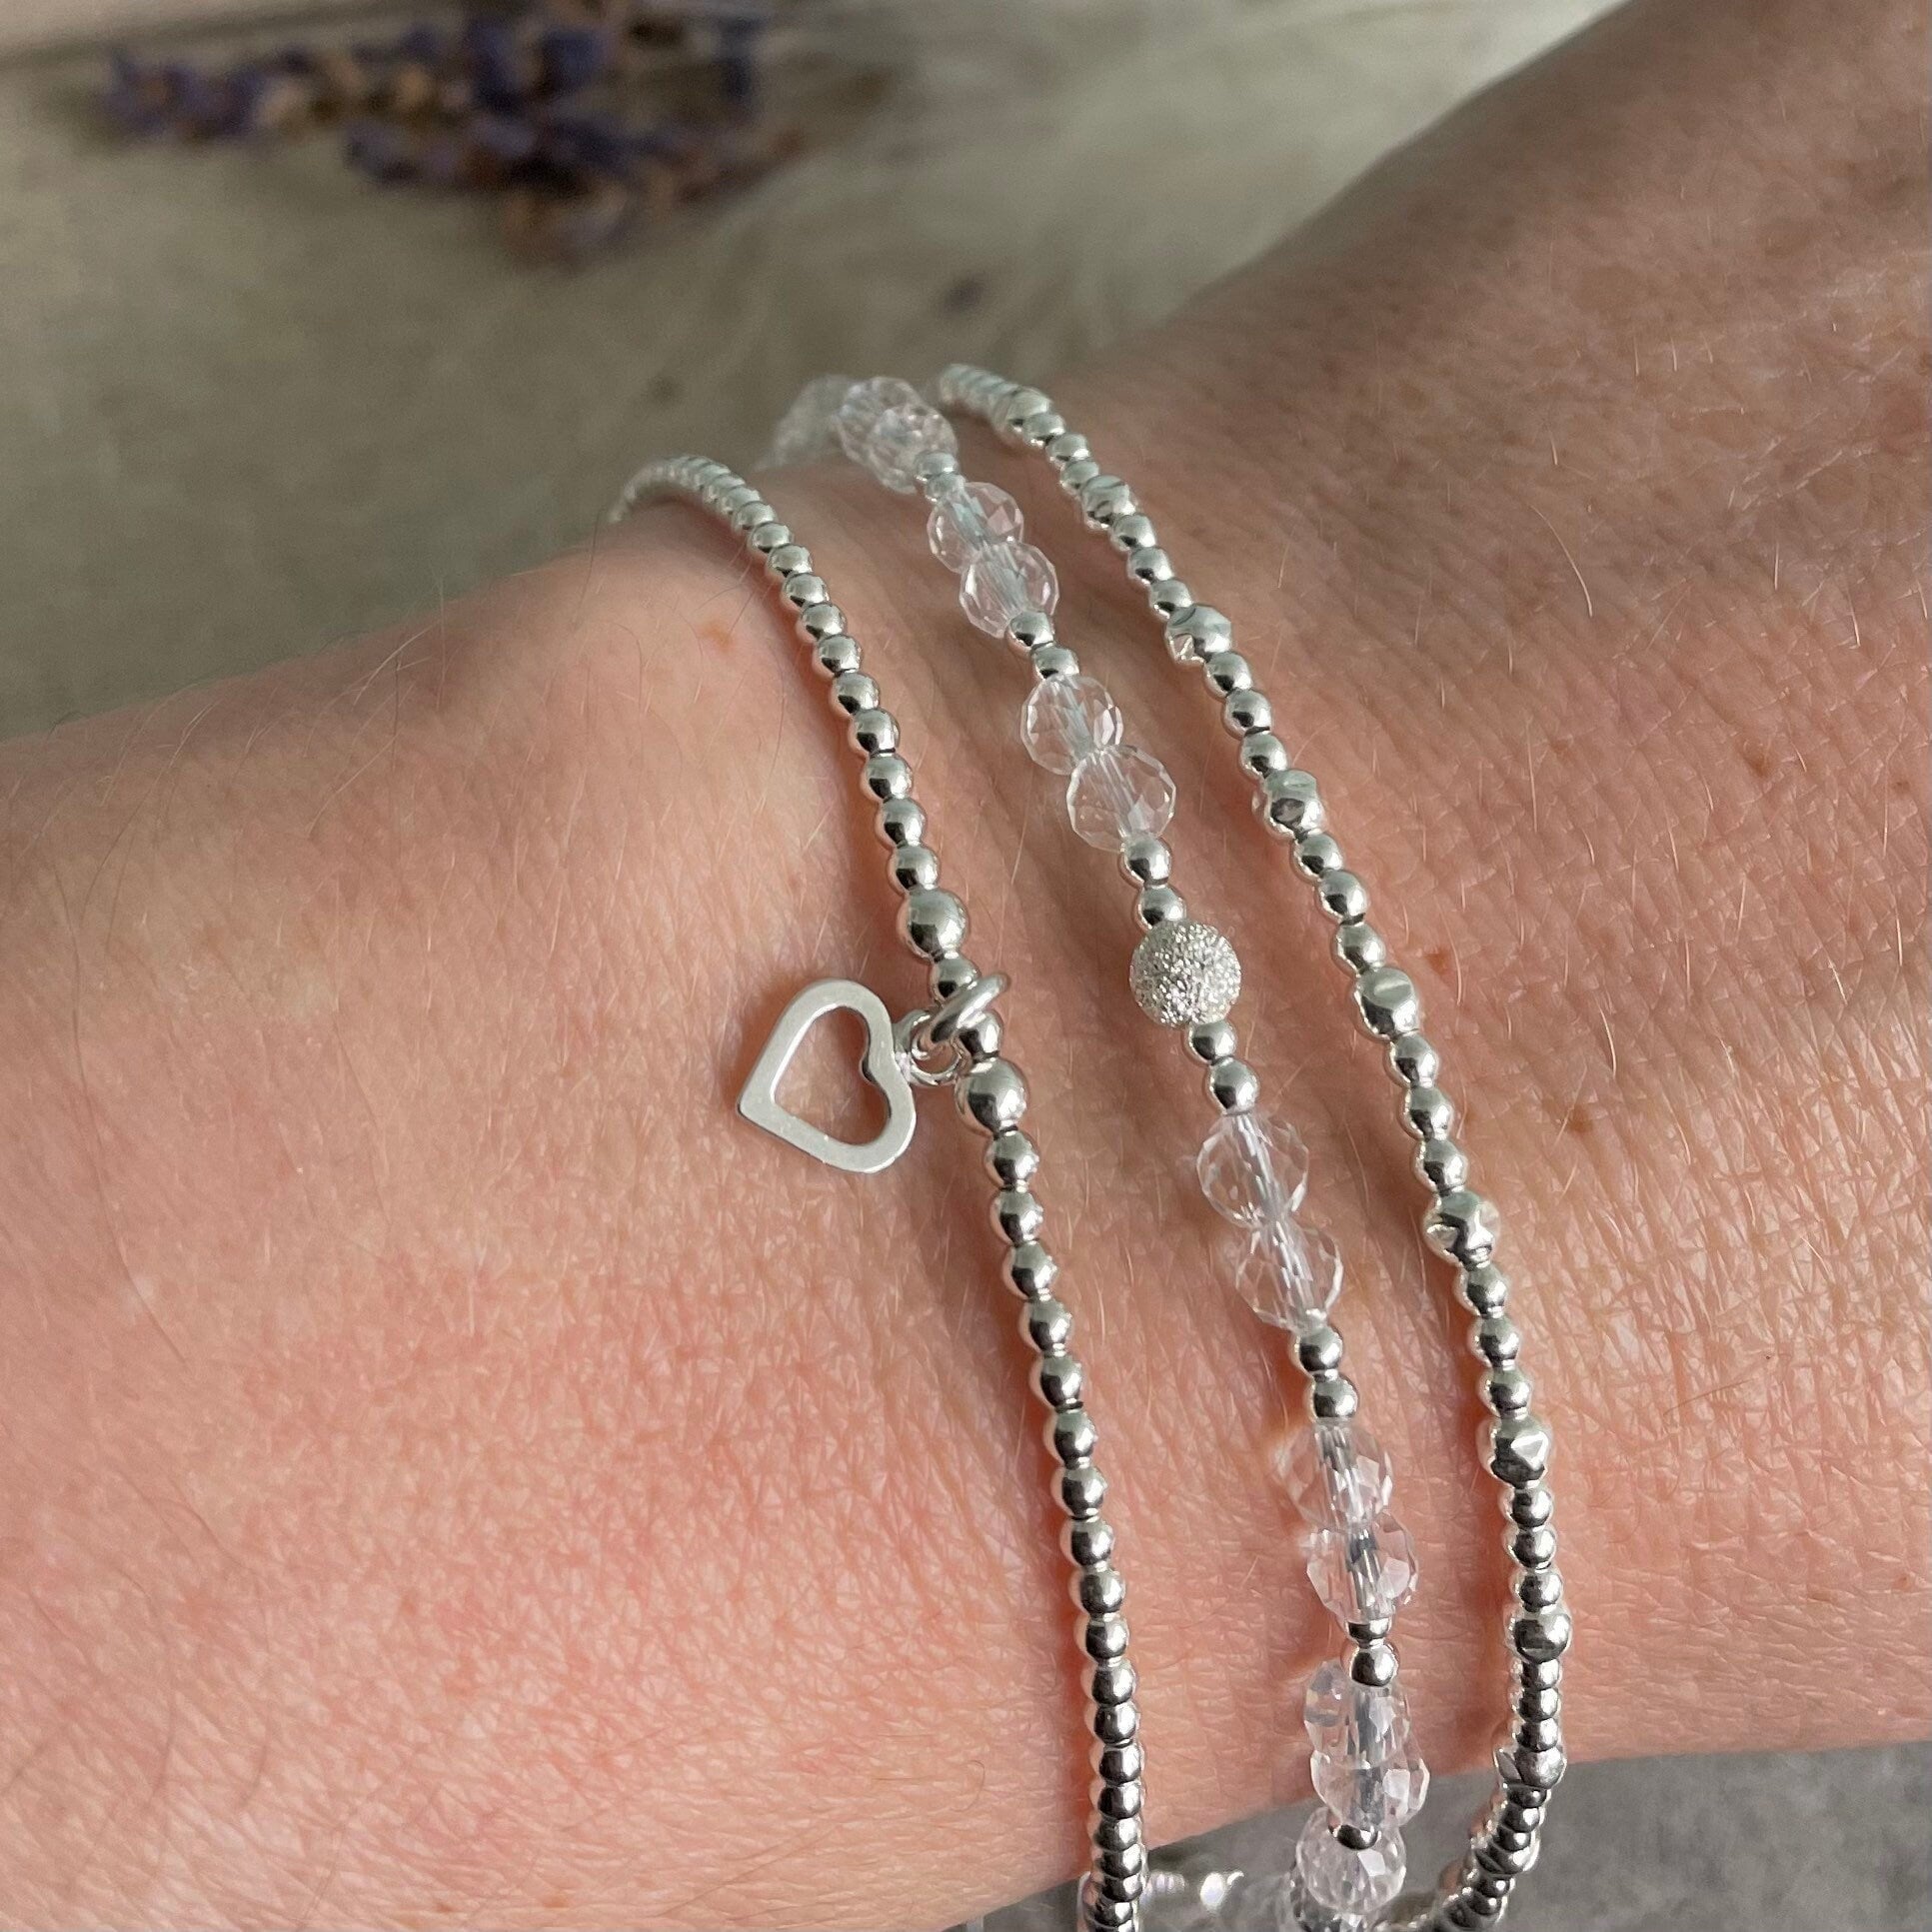 A Dainty April Birthstone Rock Quartz Bracelet Set, April Stacking Bracelets for Women in Sterling Silver